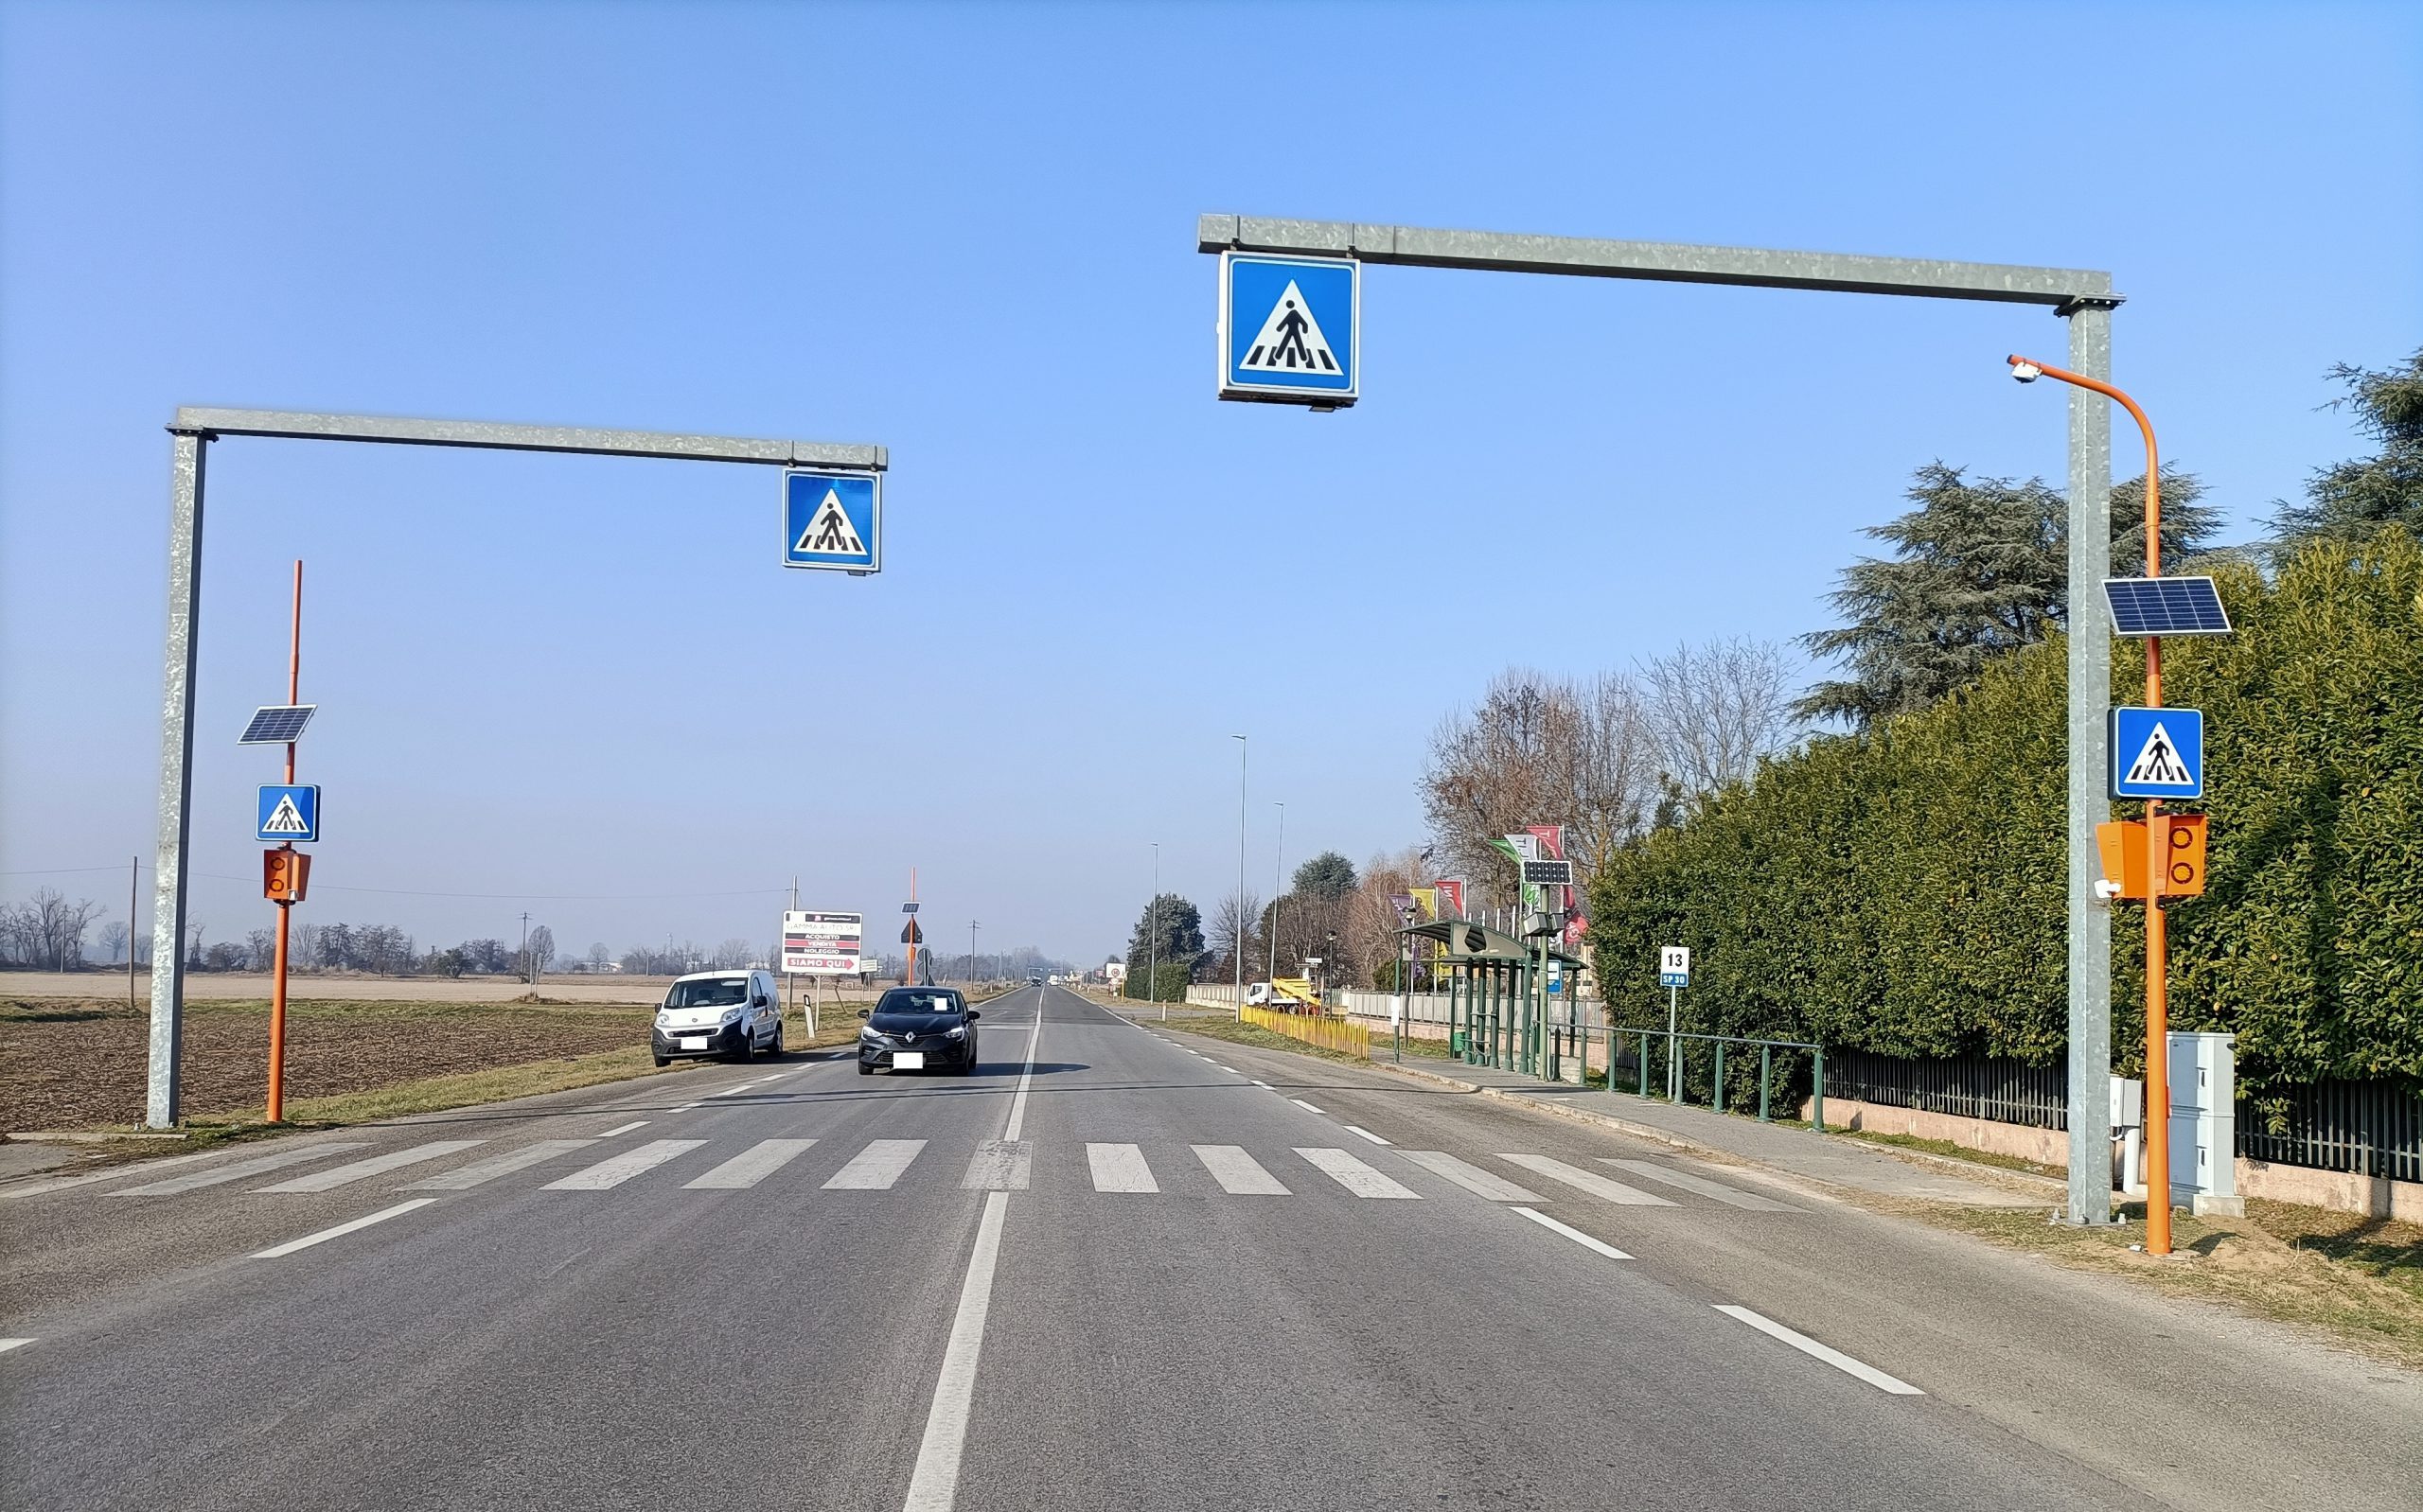 Metropolitan City of Milan’s action to road secu…